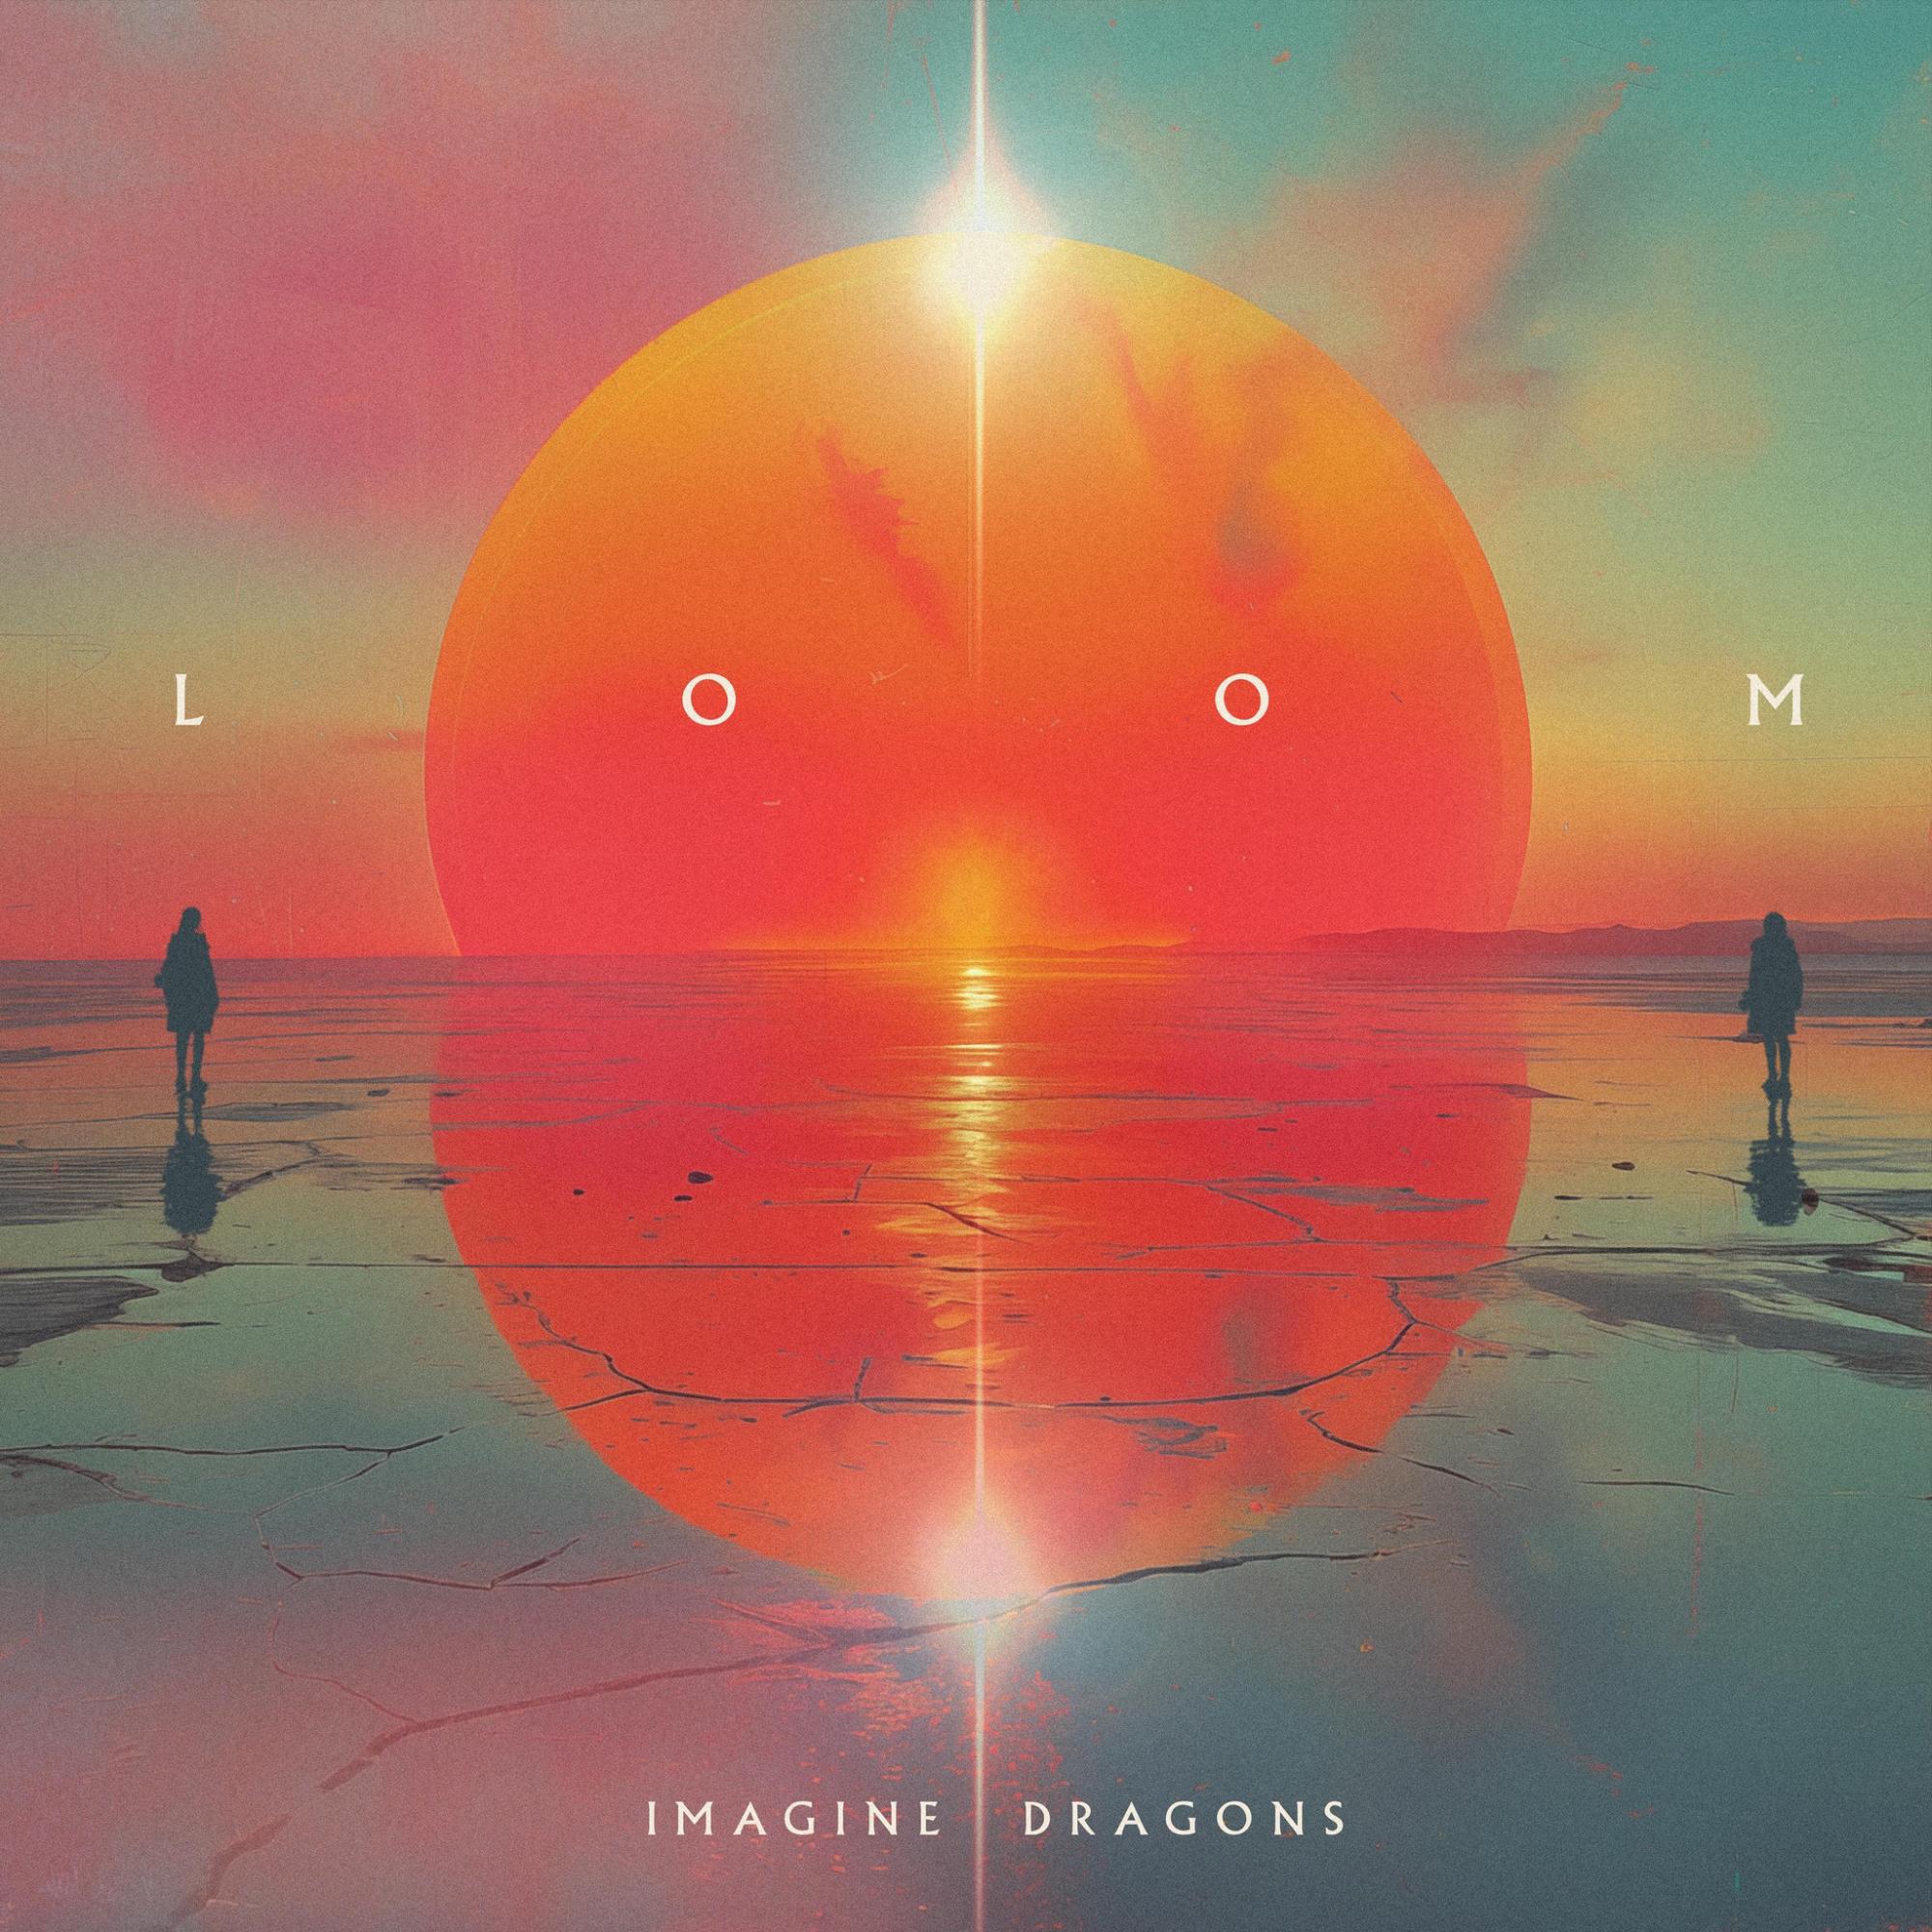 $!Anuncia Imagine Dragons nuevo álbum ‘Loom’ y gira